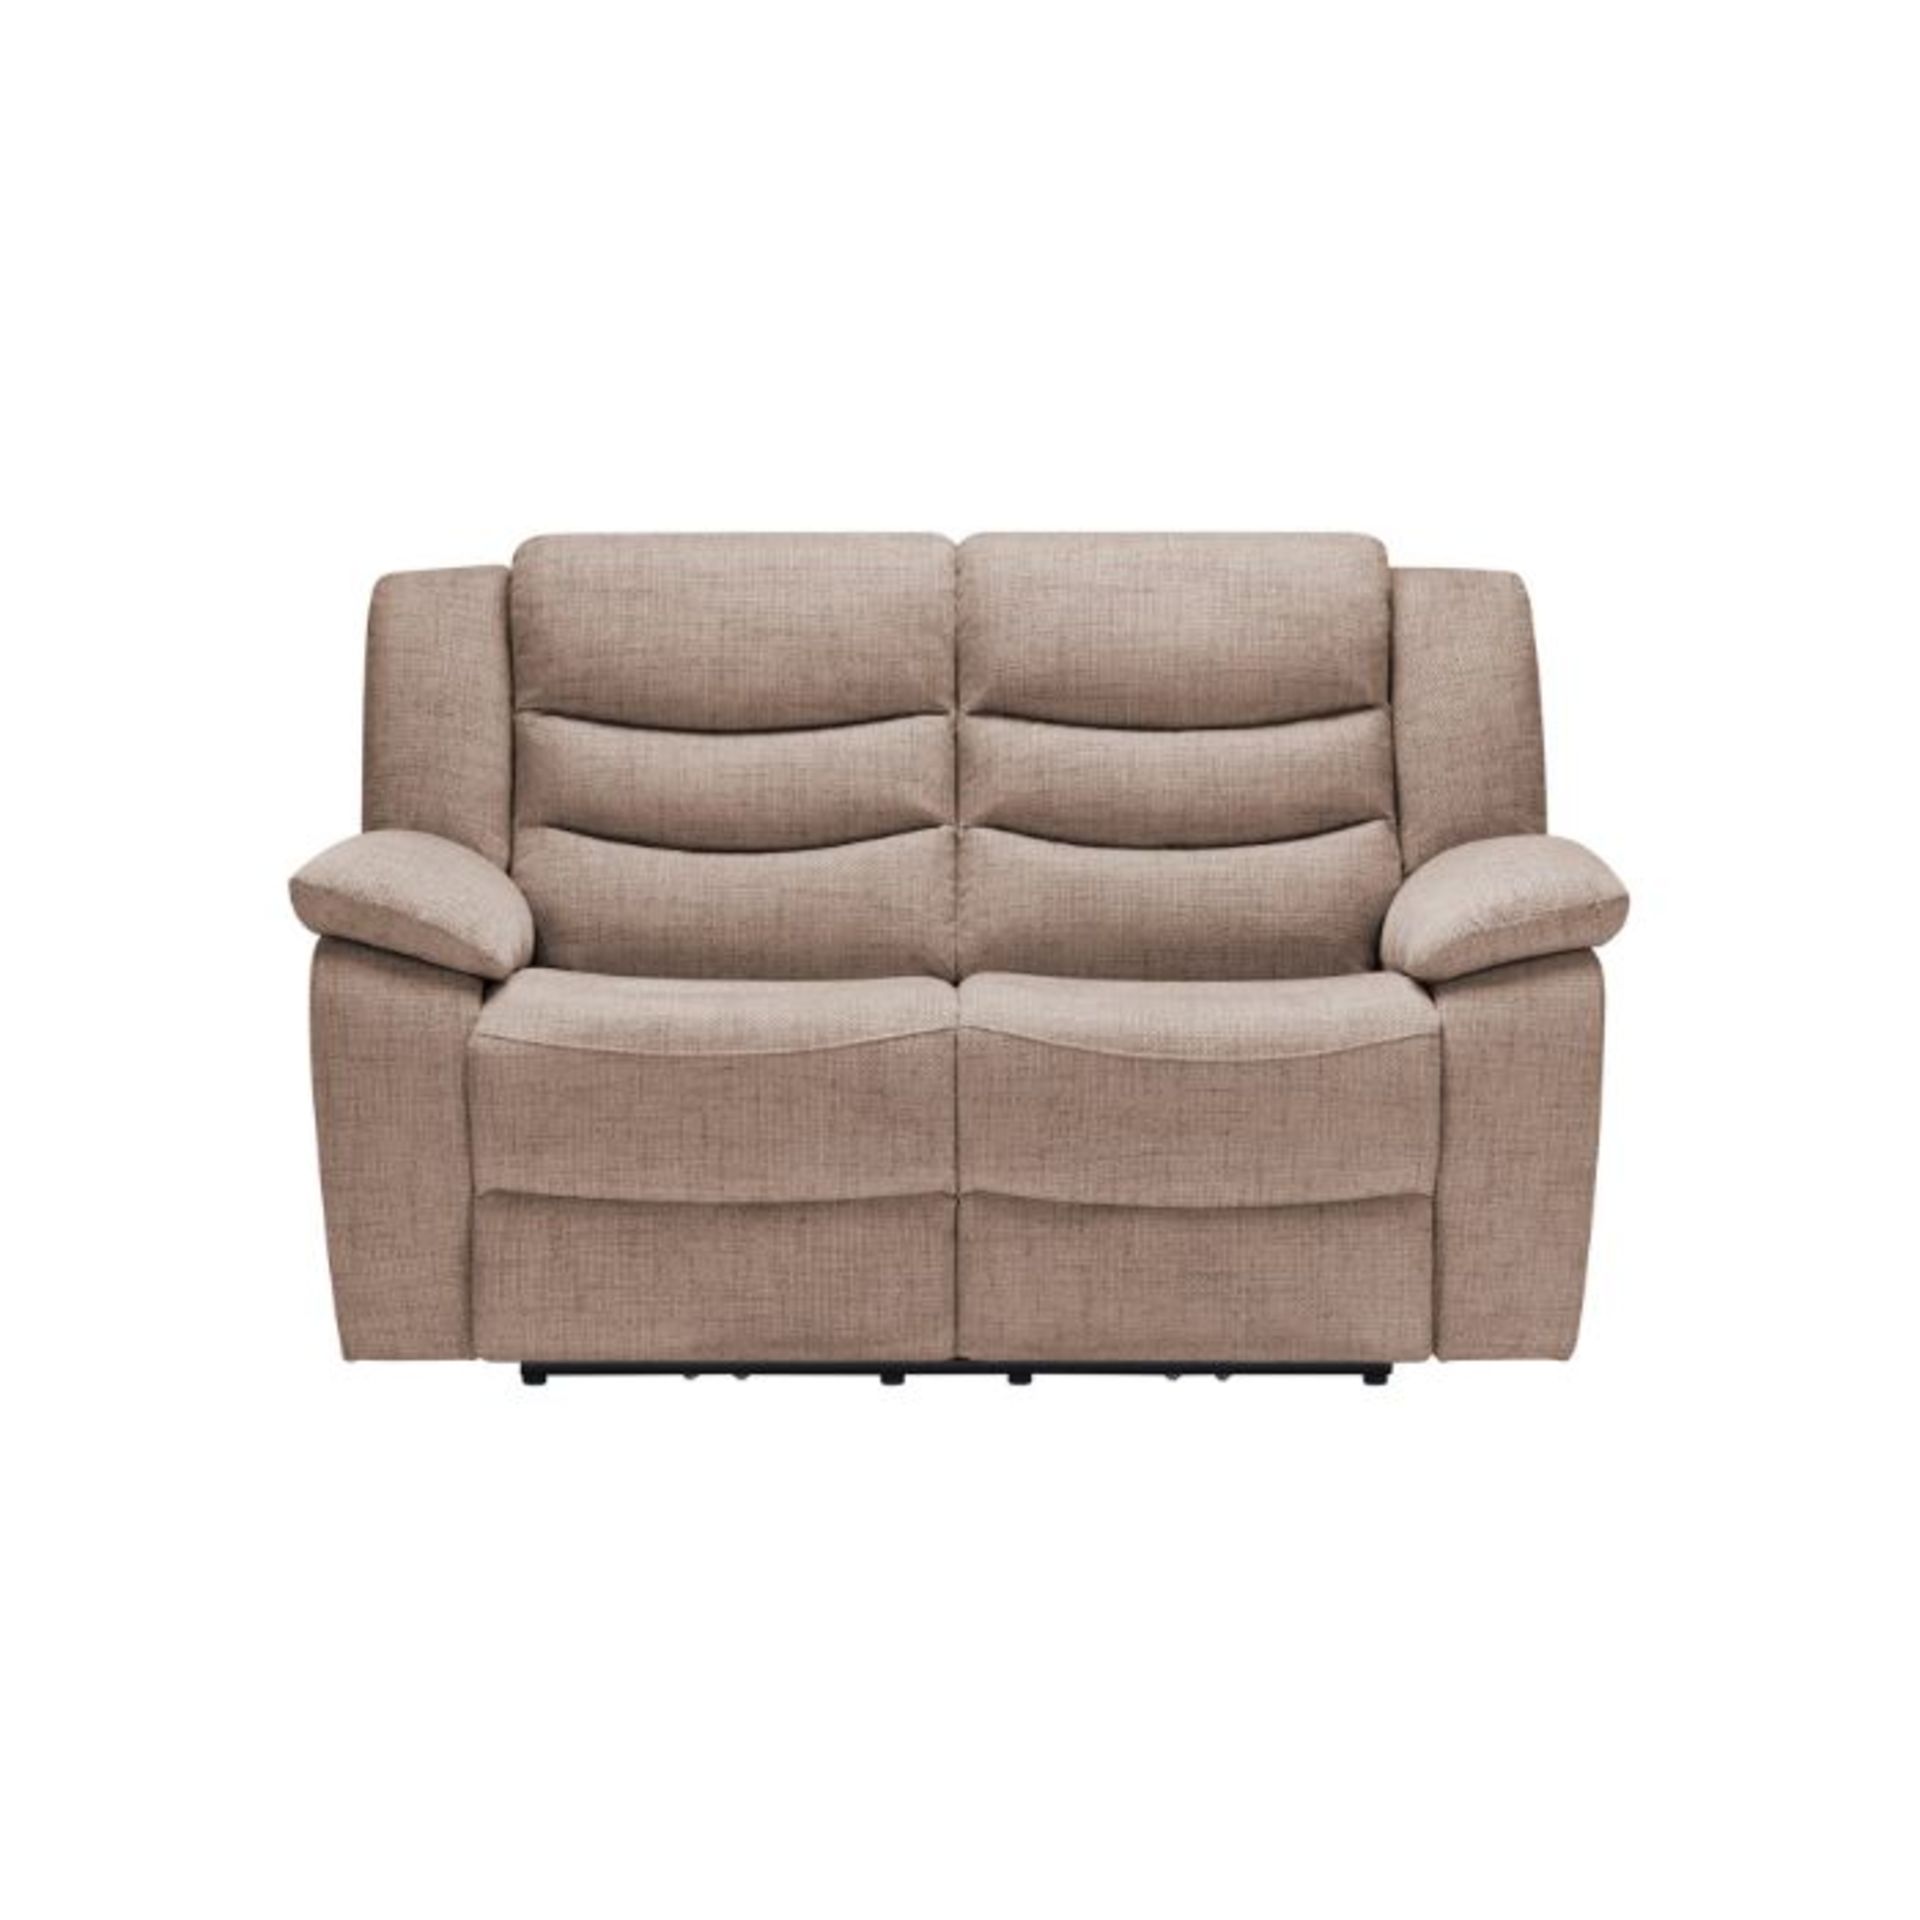 Oak Furnitureland Marlow 2 Seater Sofa In Dorset Beige Fabric RRP œ849.99 Our Marlow range is - Image 2 of 4